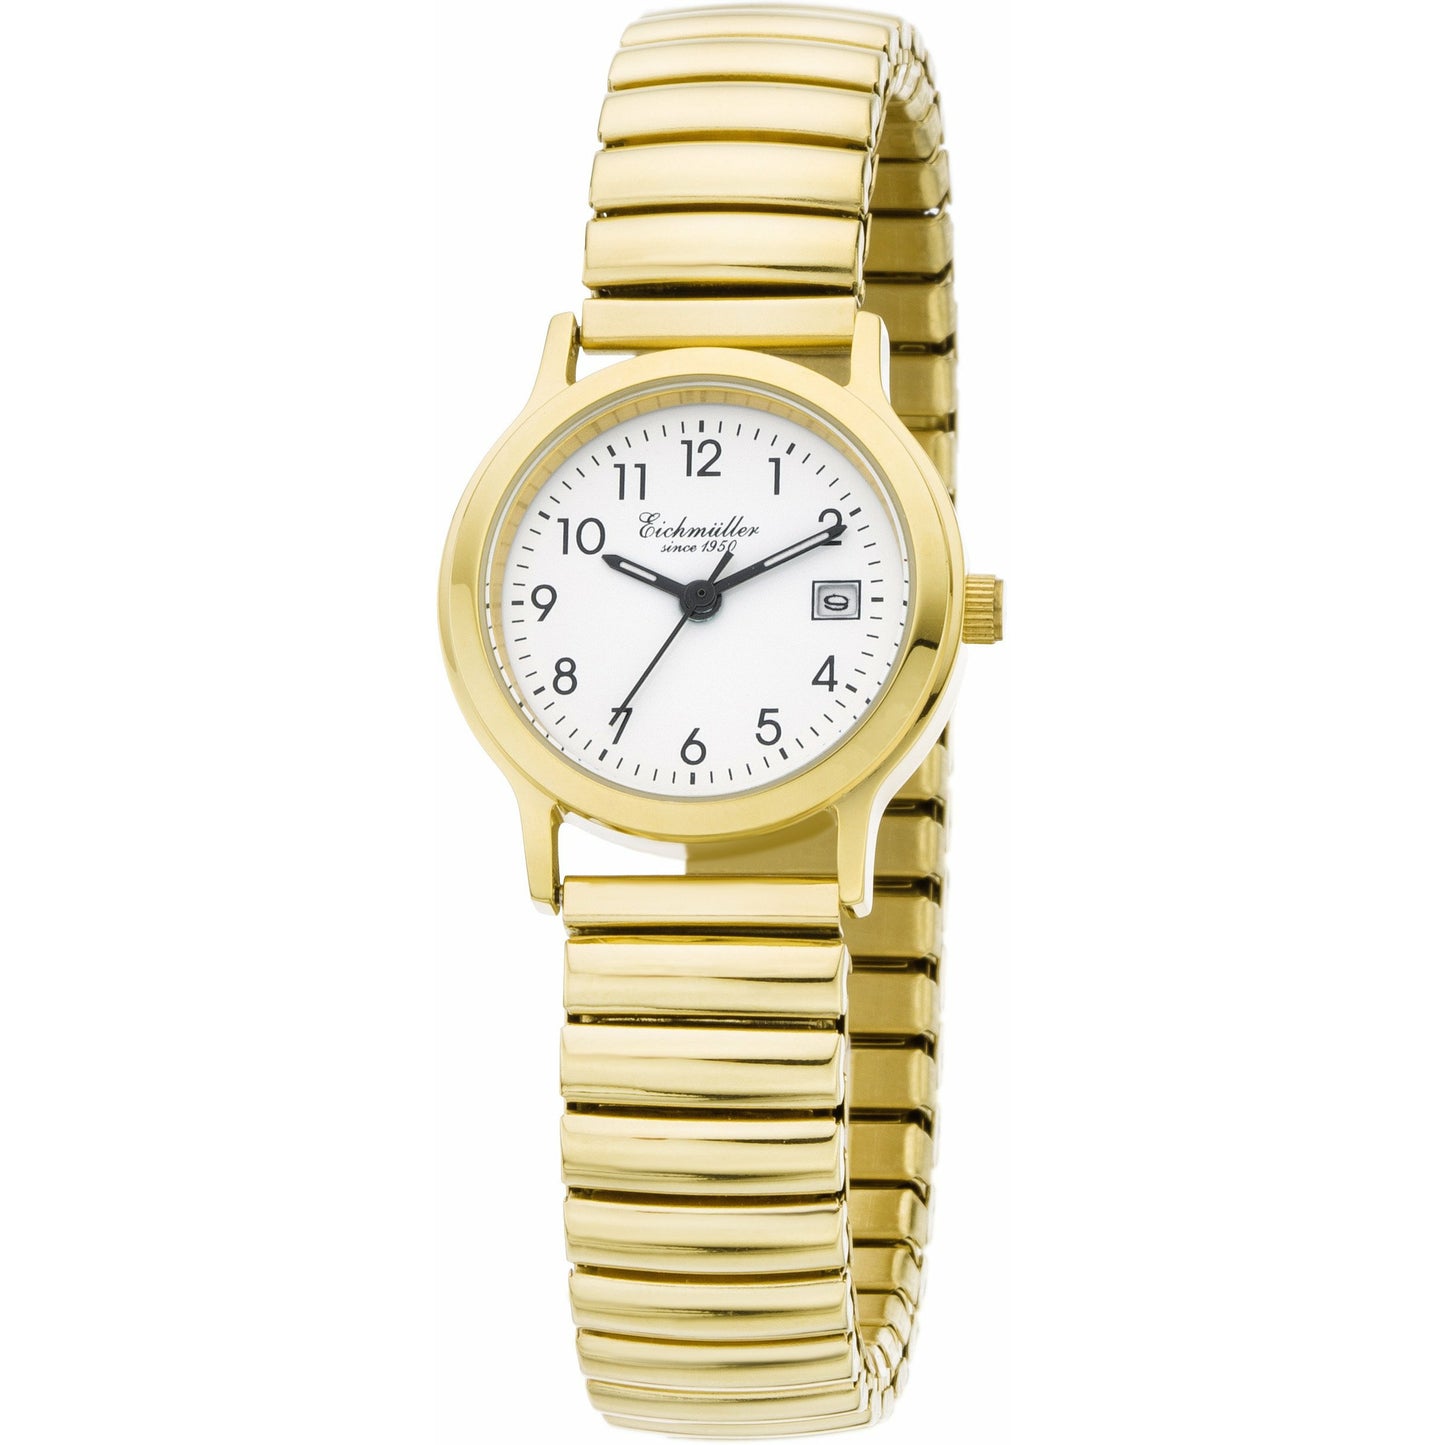 EICHMULLER since 1950 Flex Strap Lady, Gold/White Watch